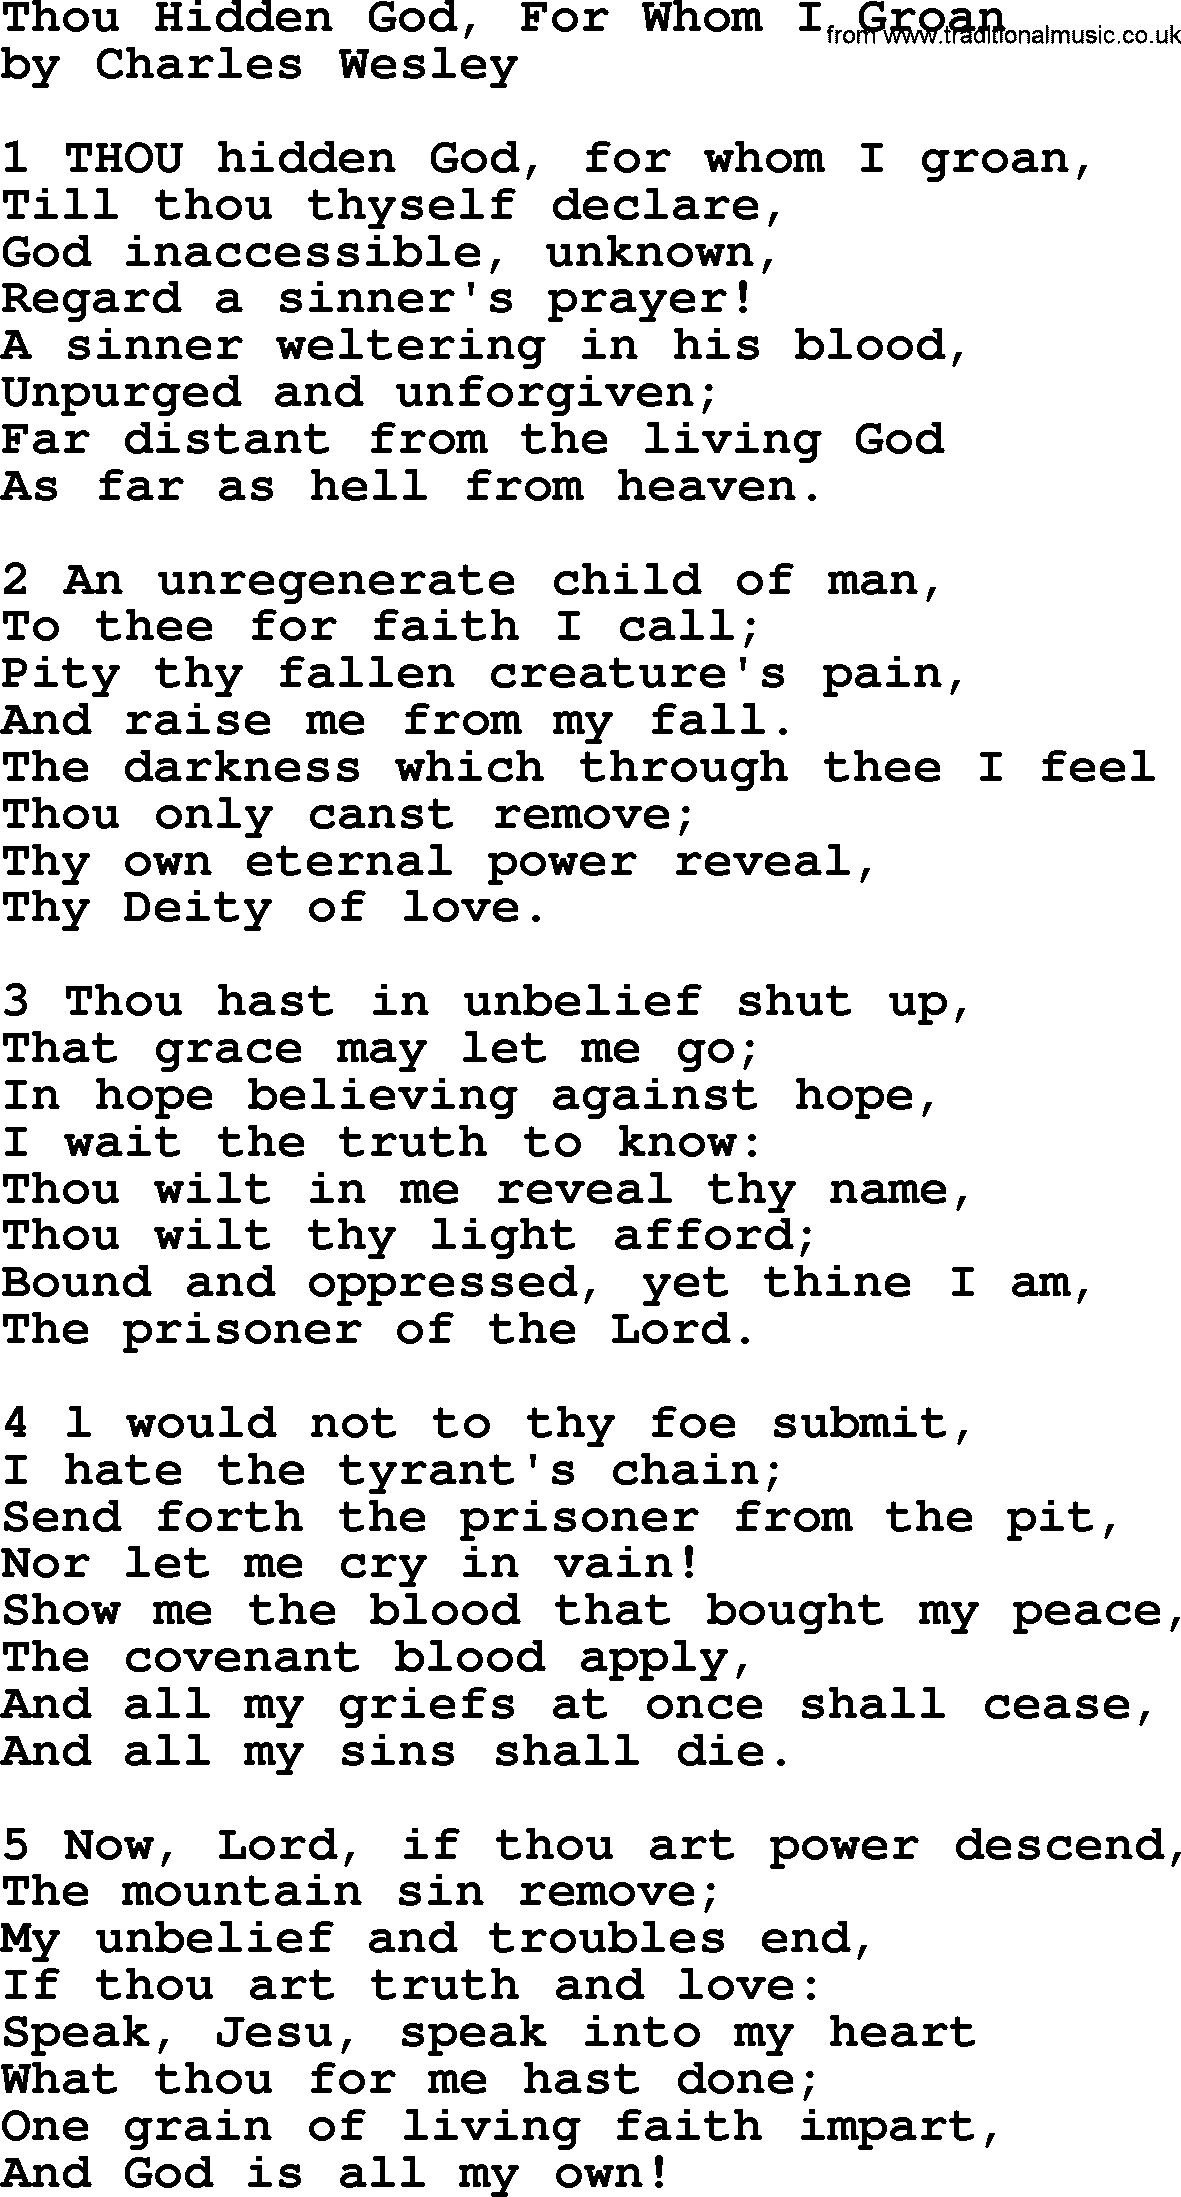 Charles Wesley hymn: Thou Hidden God, For Whom I Groan, lyrics